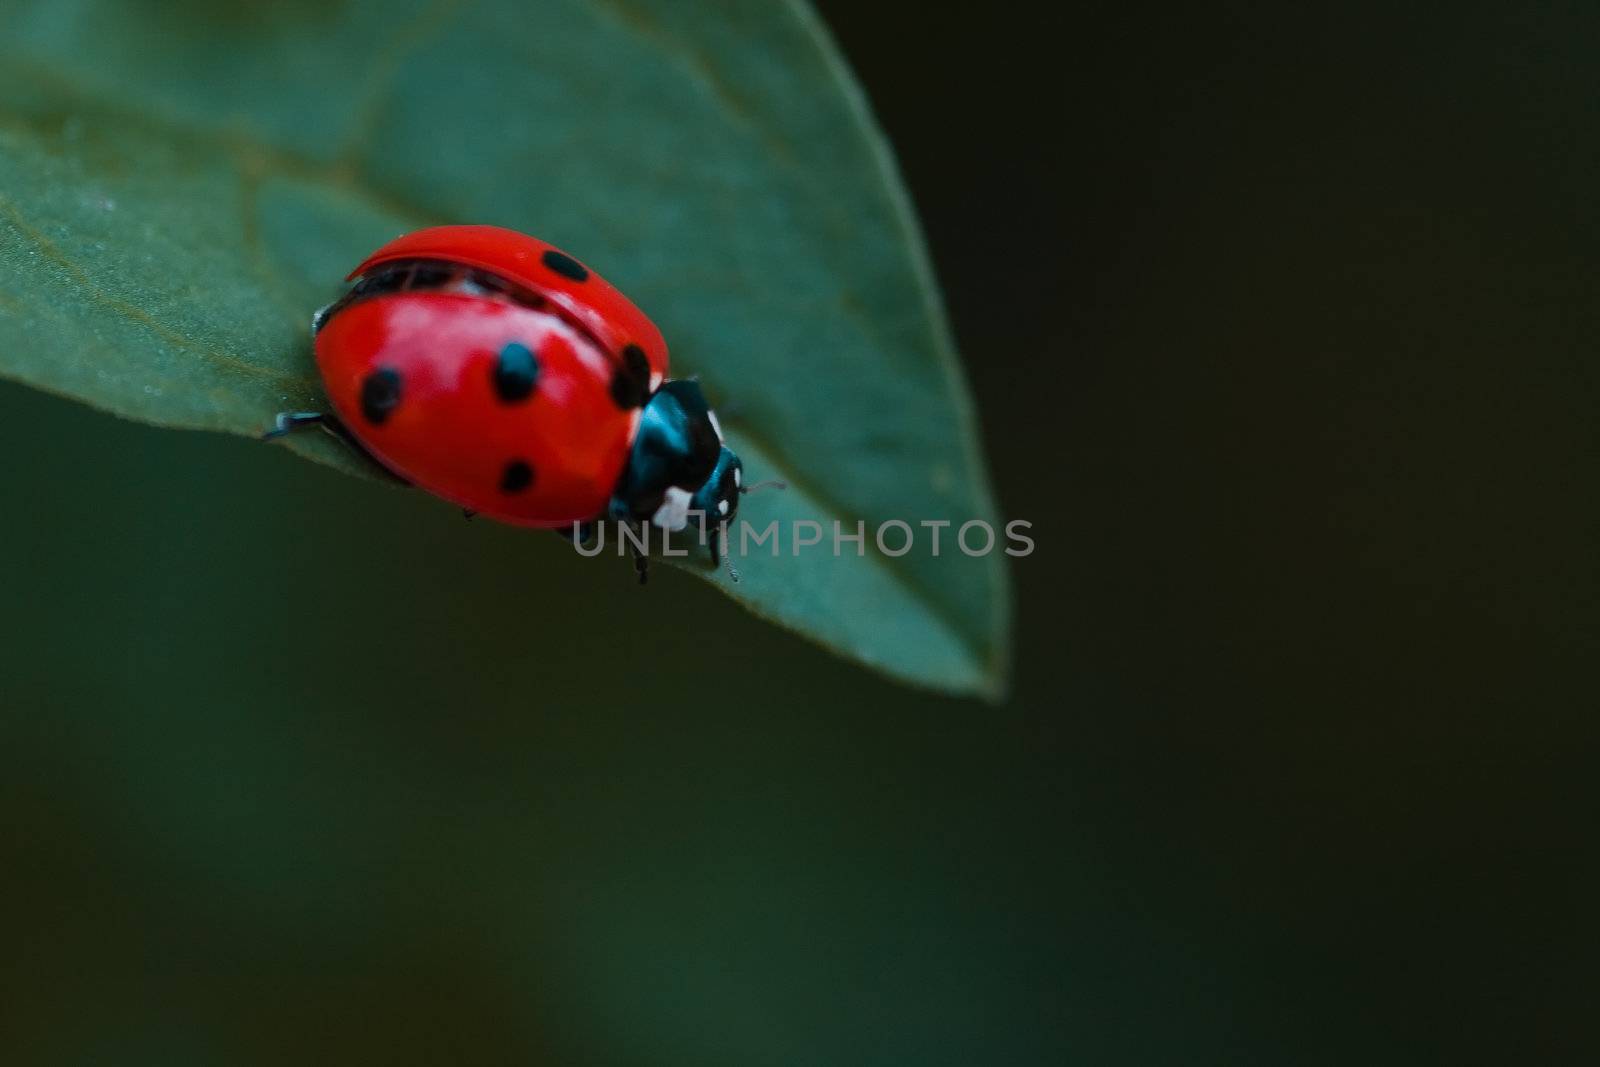 A ladybug on the edge of a leaf